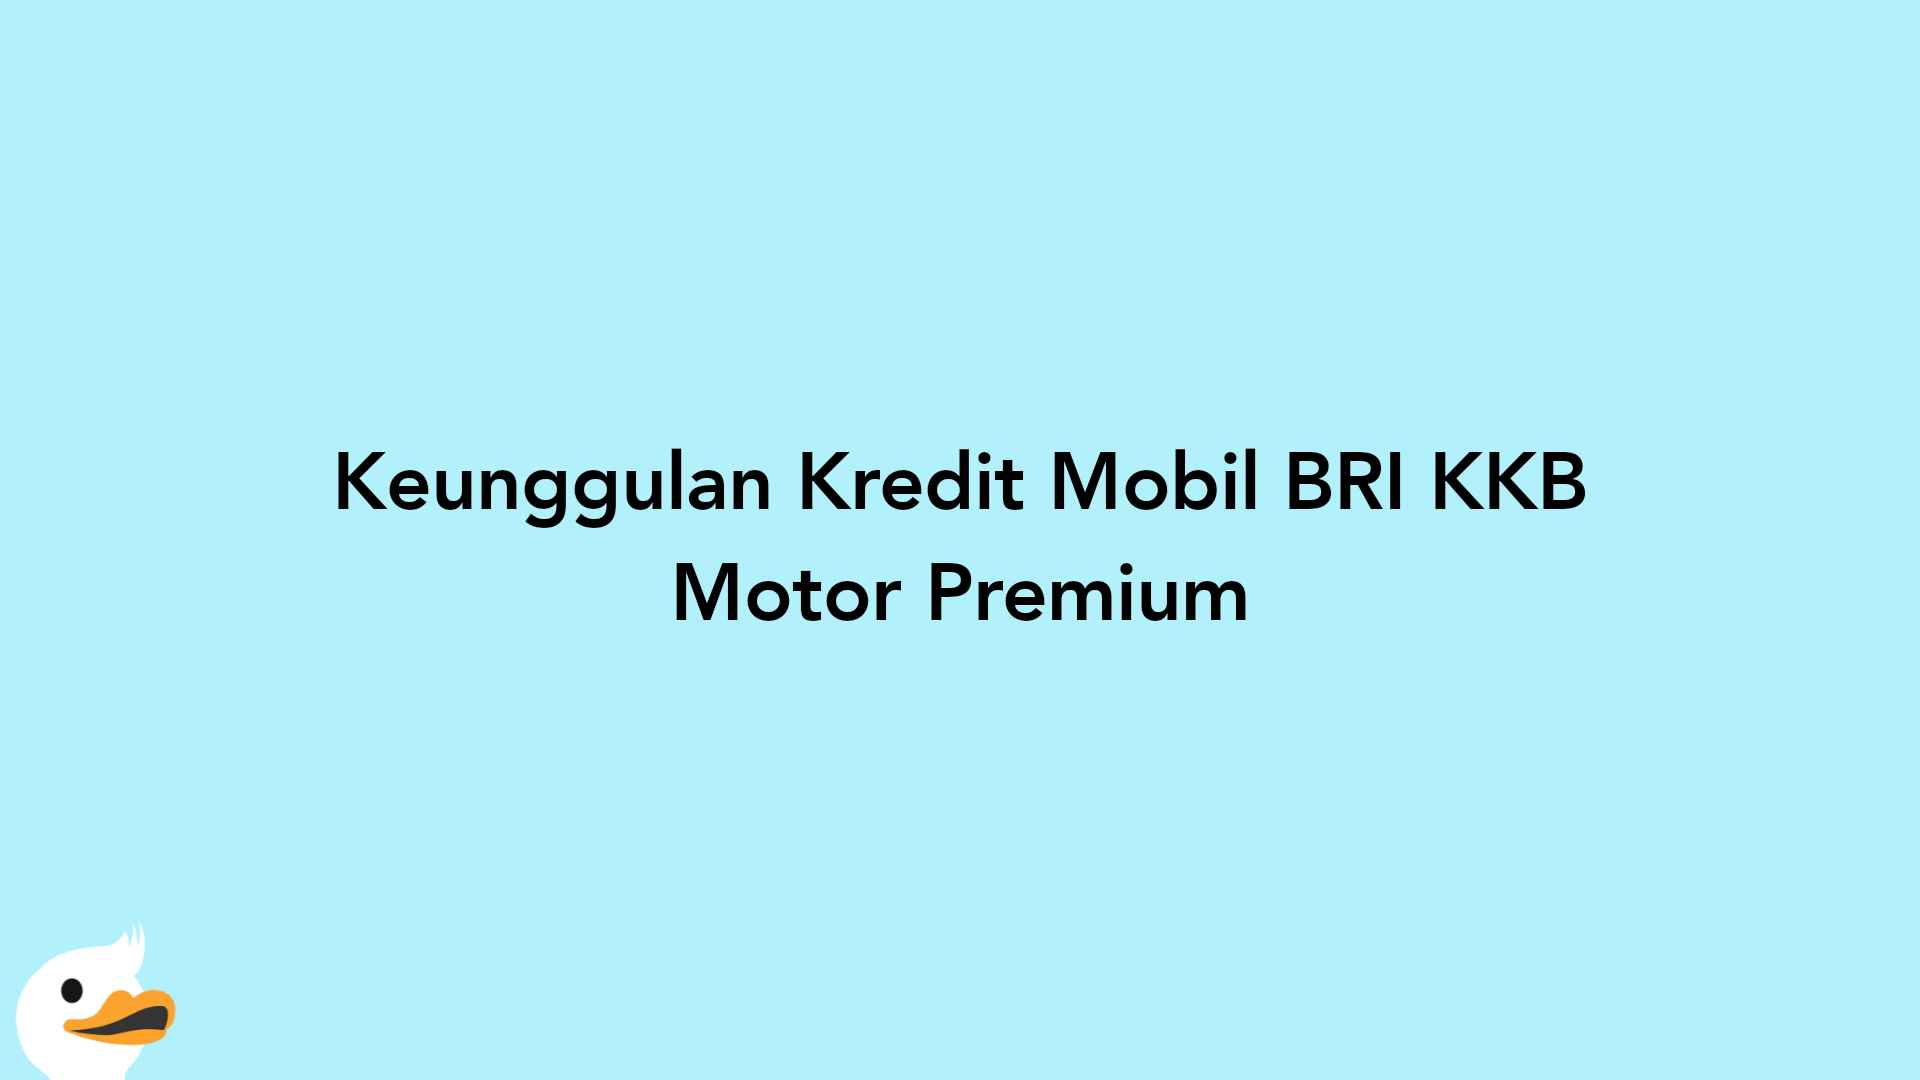 Keunggulan Kredit Mobil BRI KKB Motor Premium